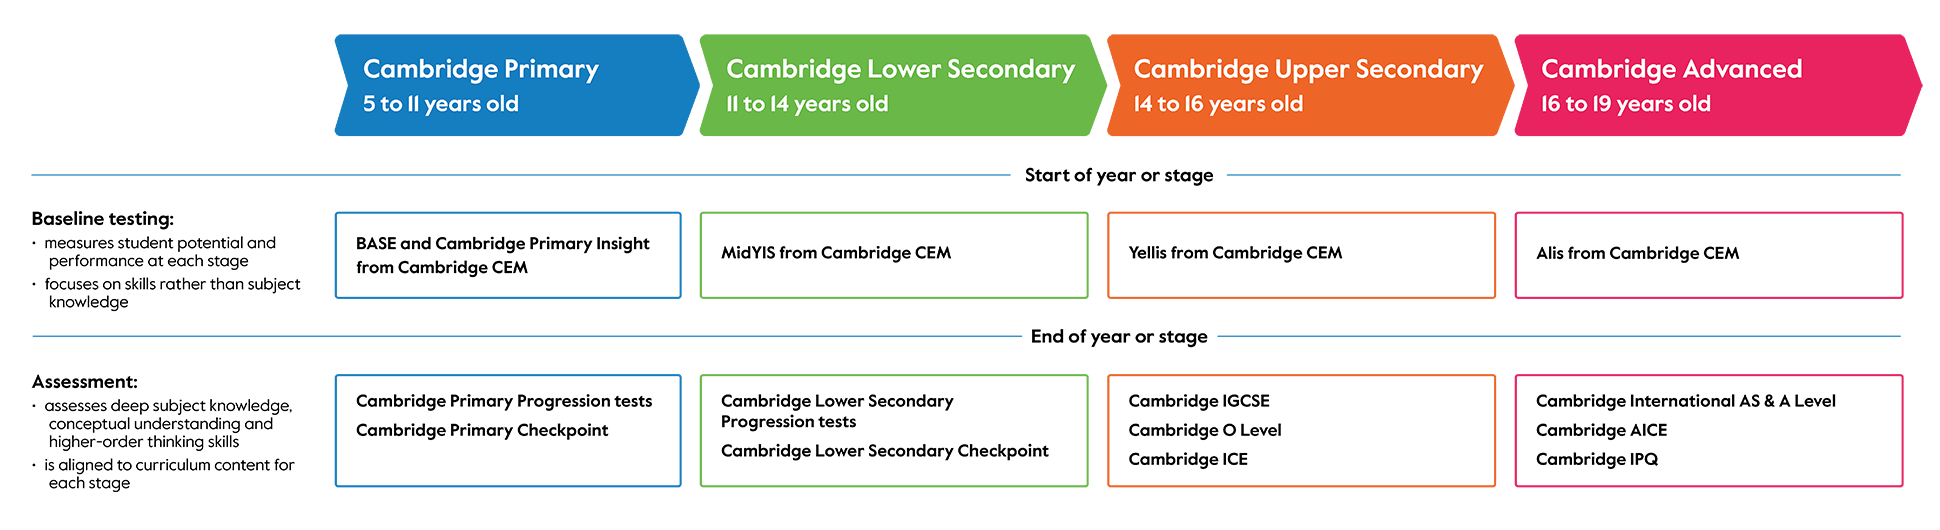 cambridge-pathway-image